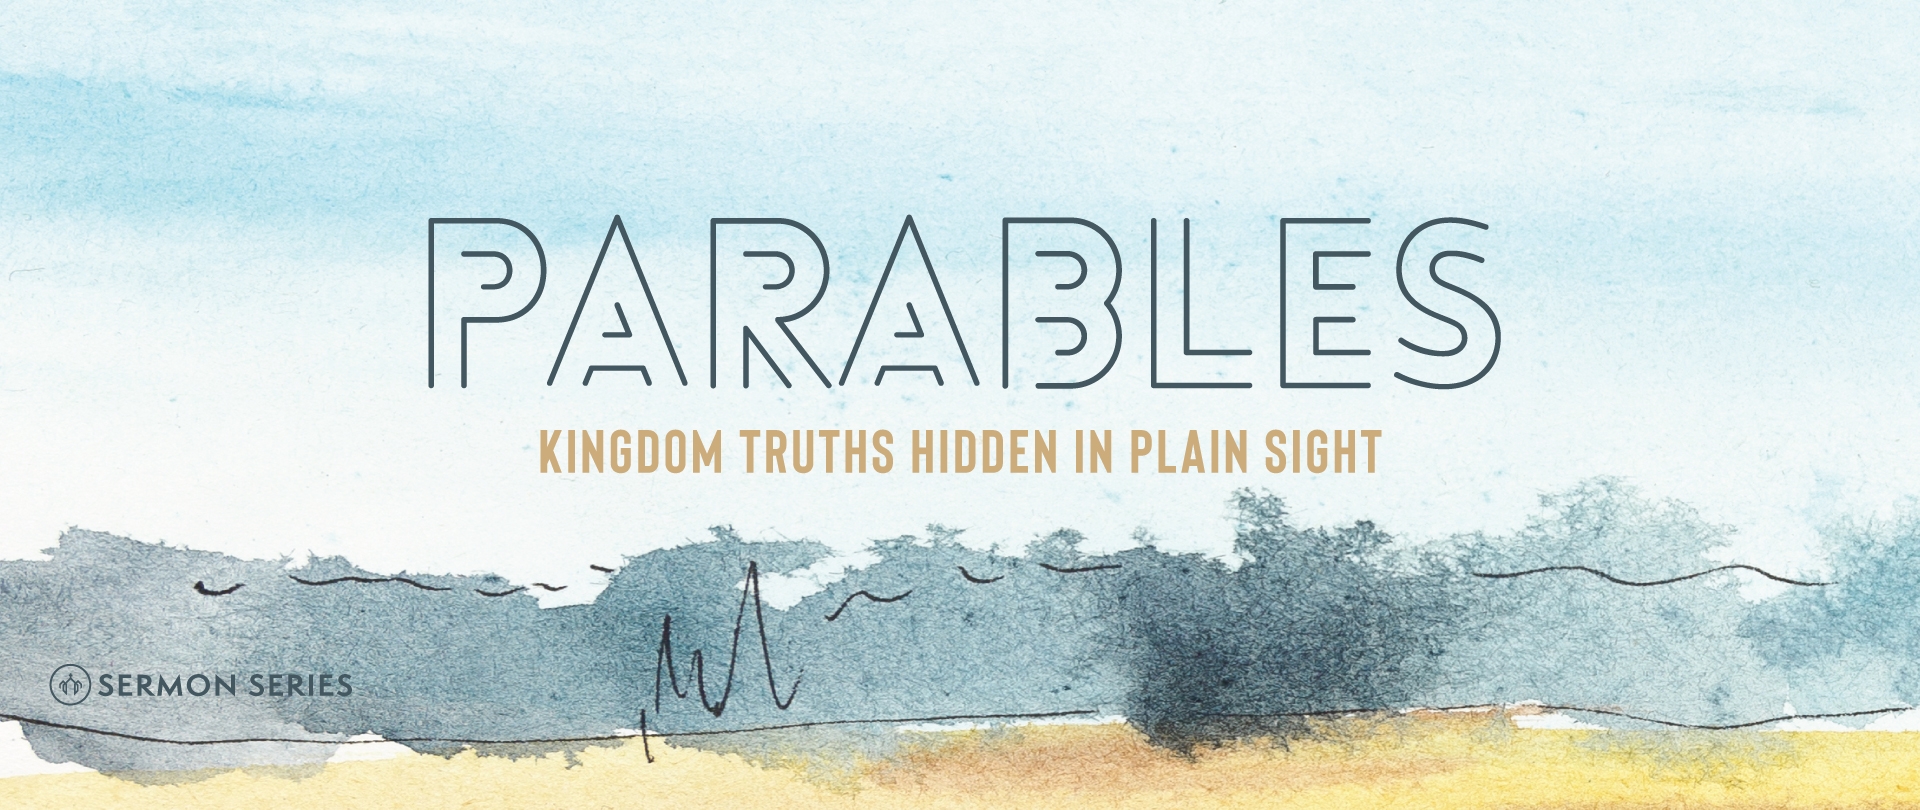 Parables - Kingdom truths hidden in plain sight